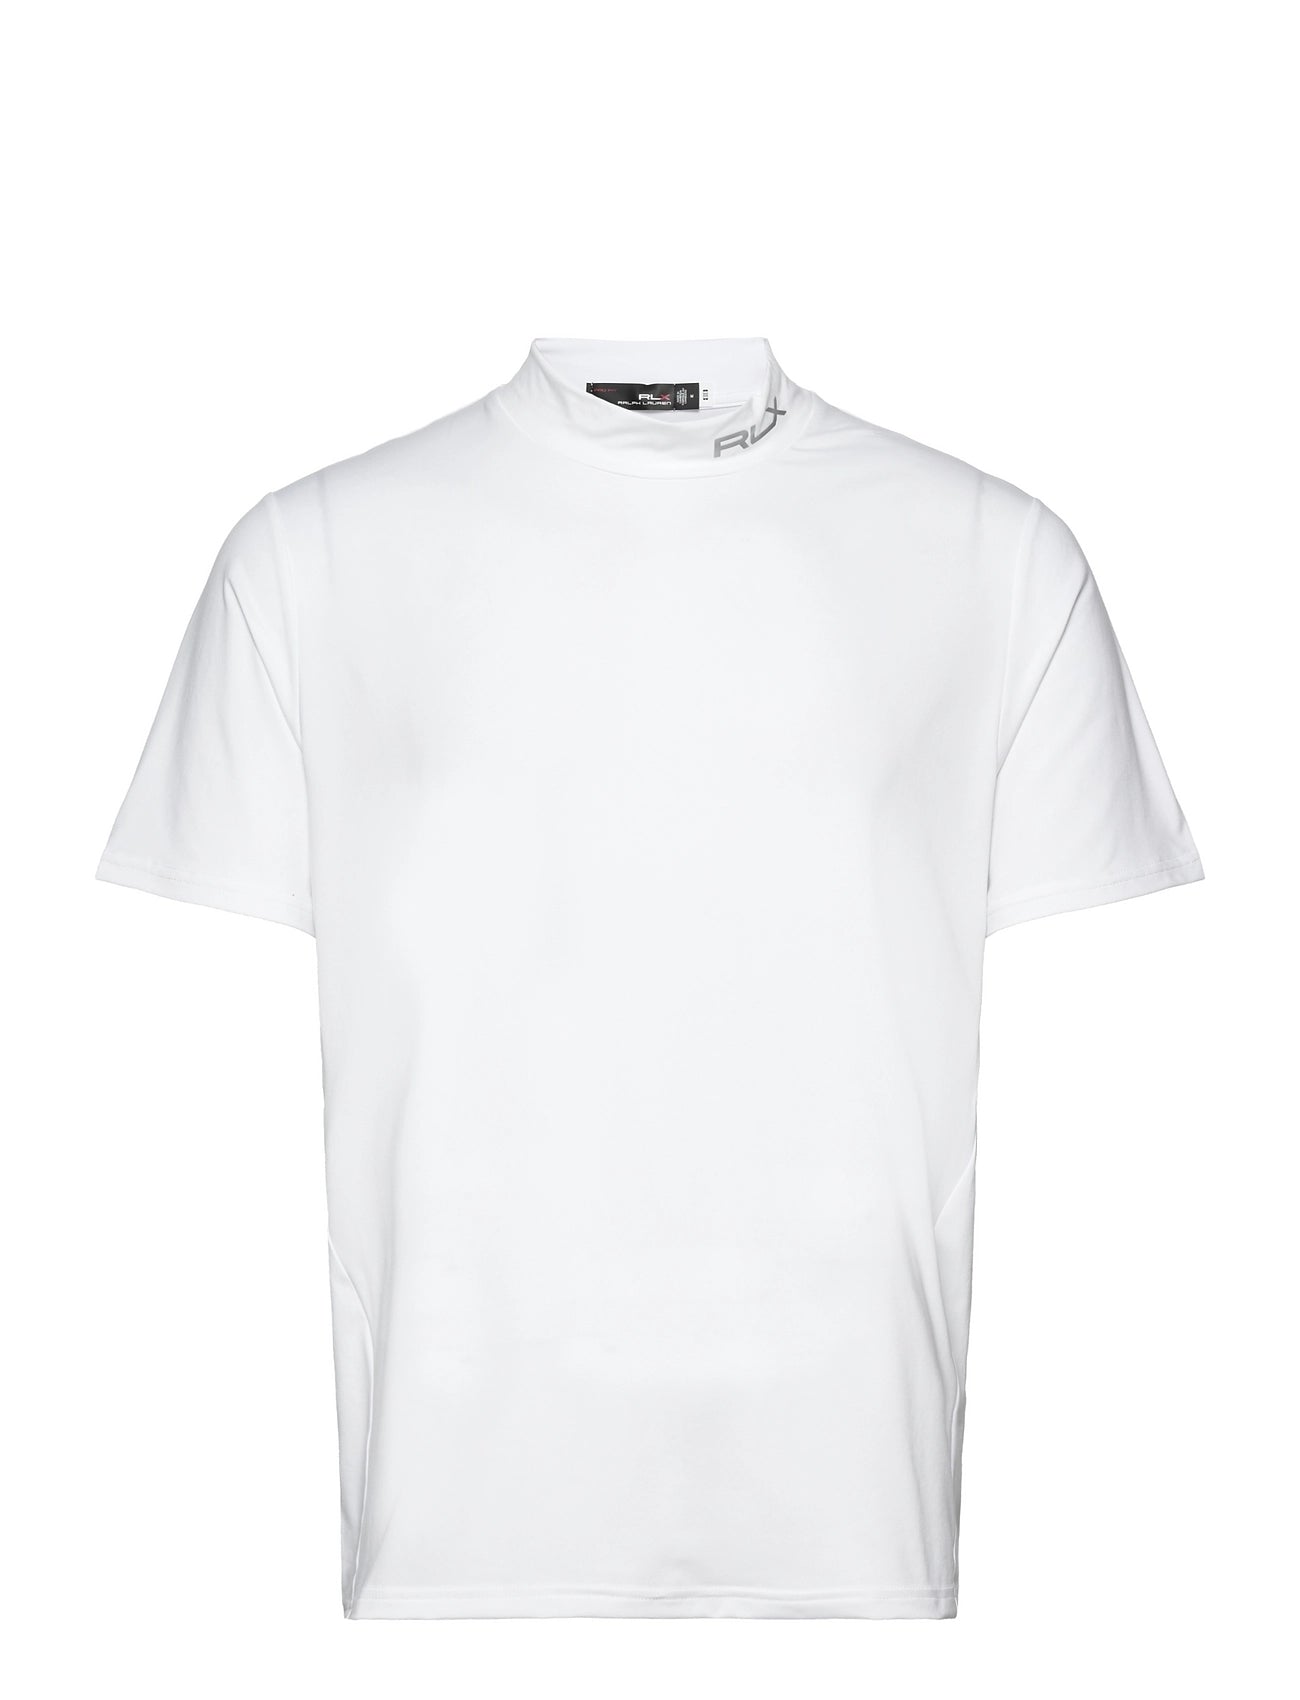 RLX Slim Fit Performance Jersey Shirt